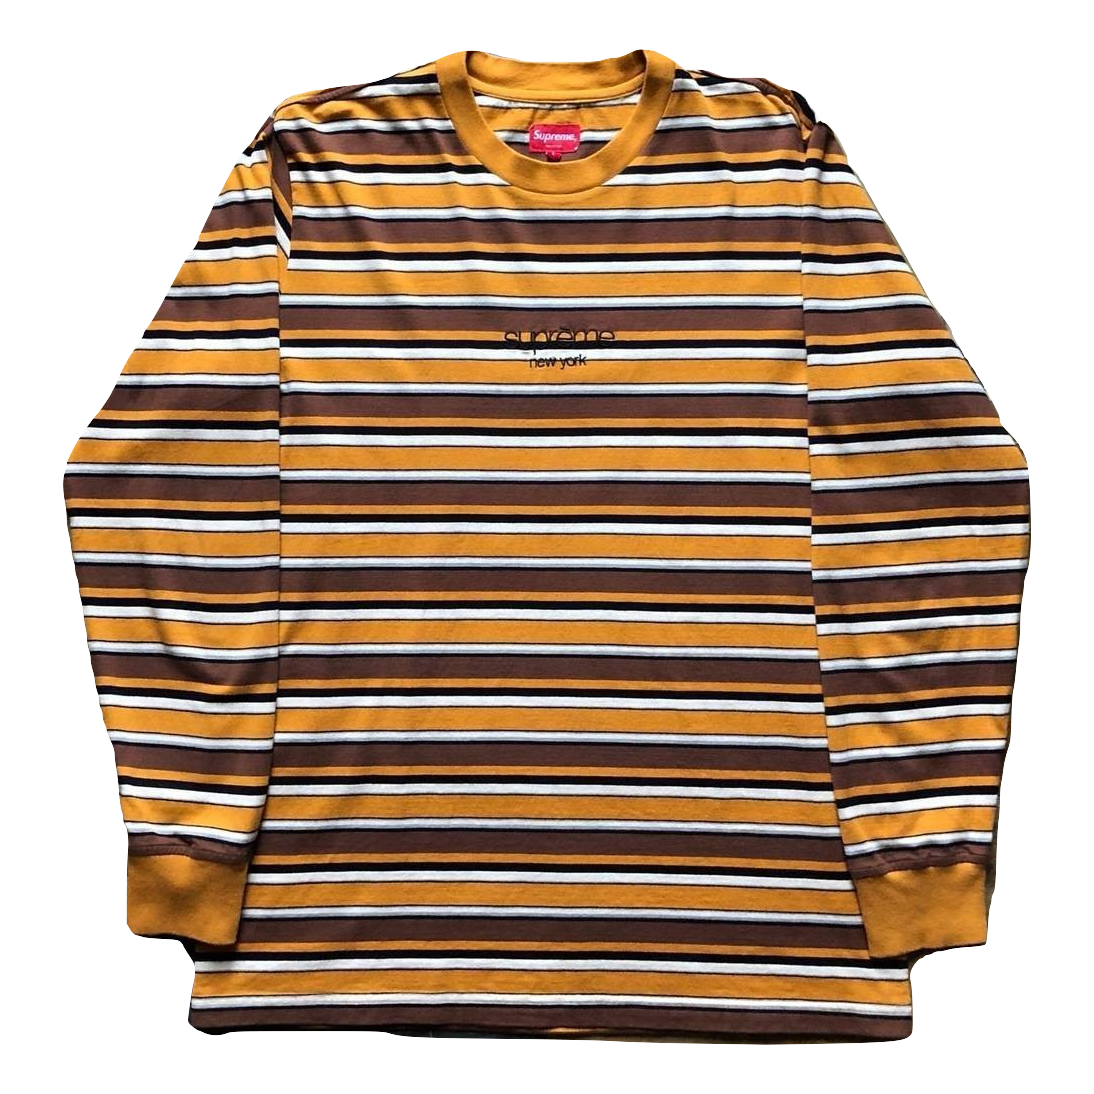 Supreme Classic Logo Stripe Long Sleeve - Mustard